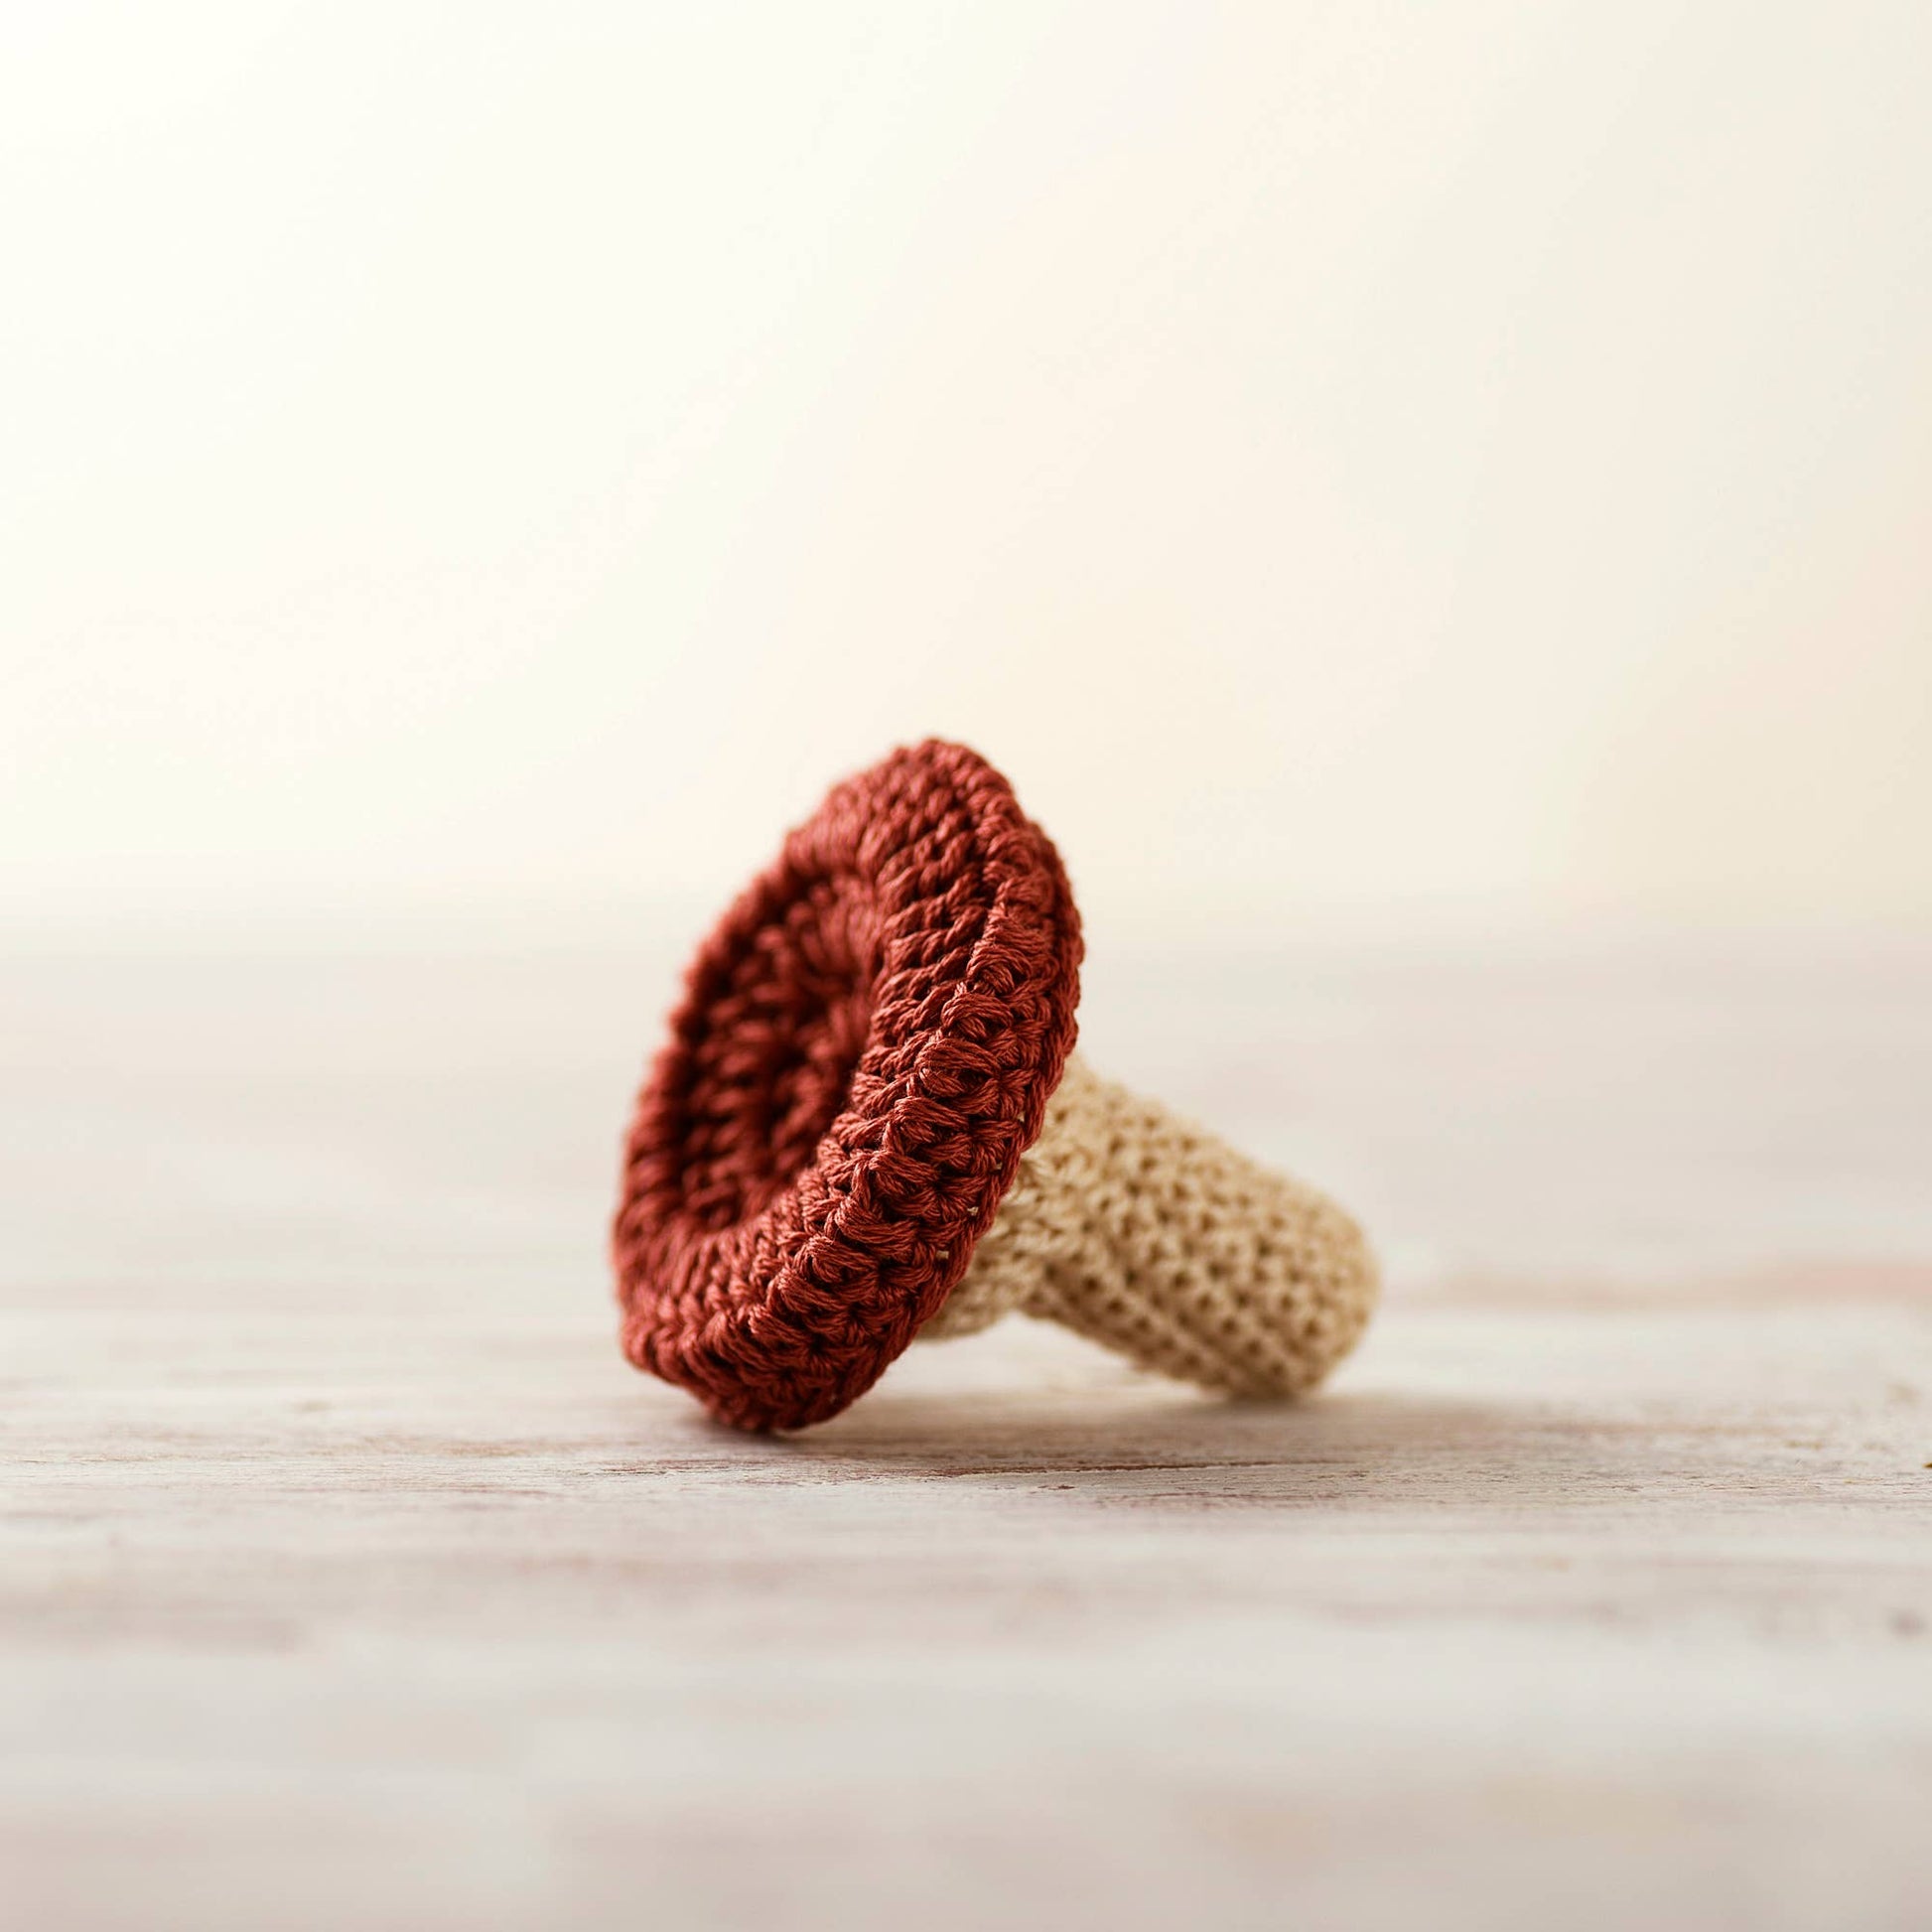 Crochet saffron milk cap mushroom